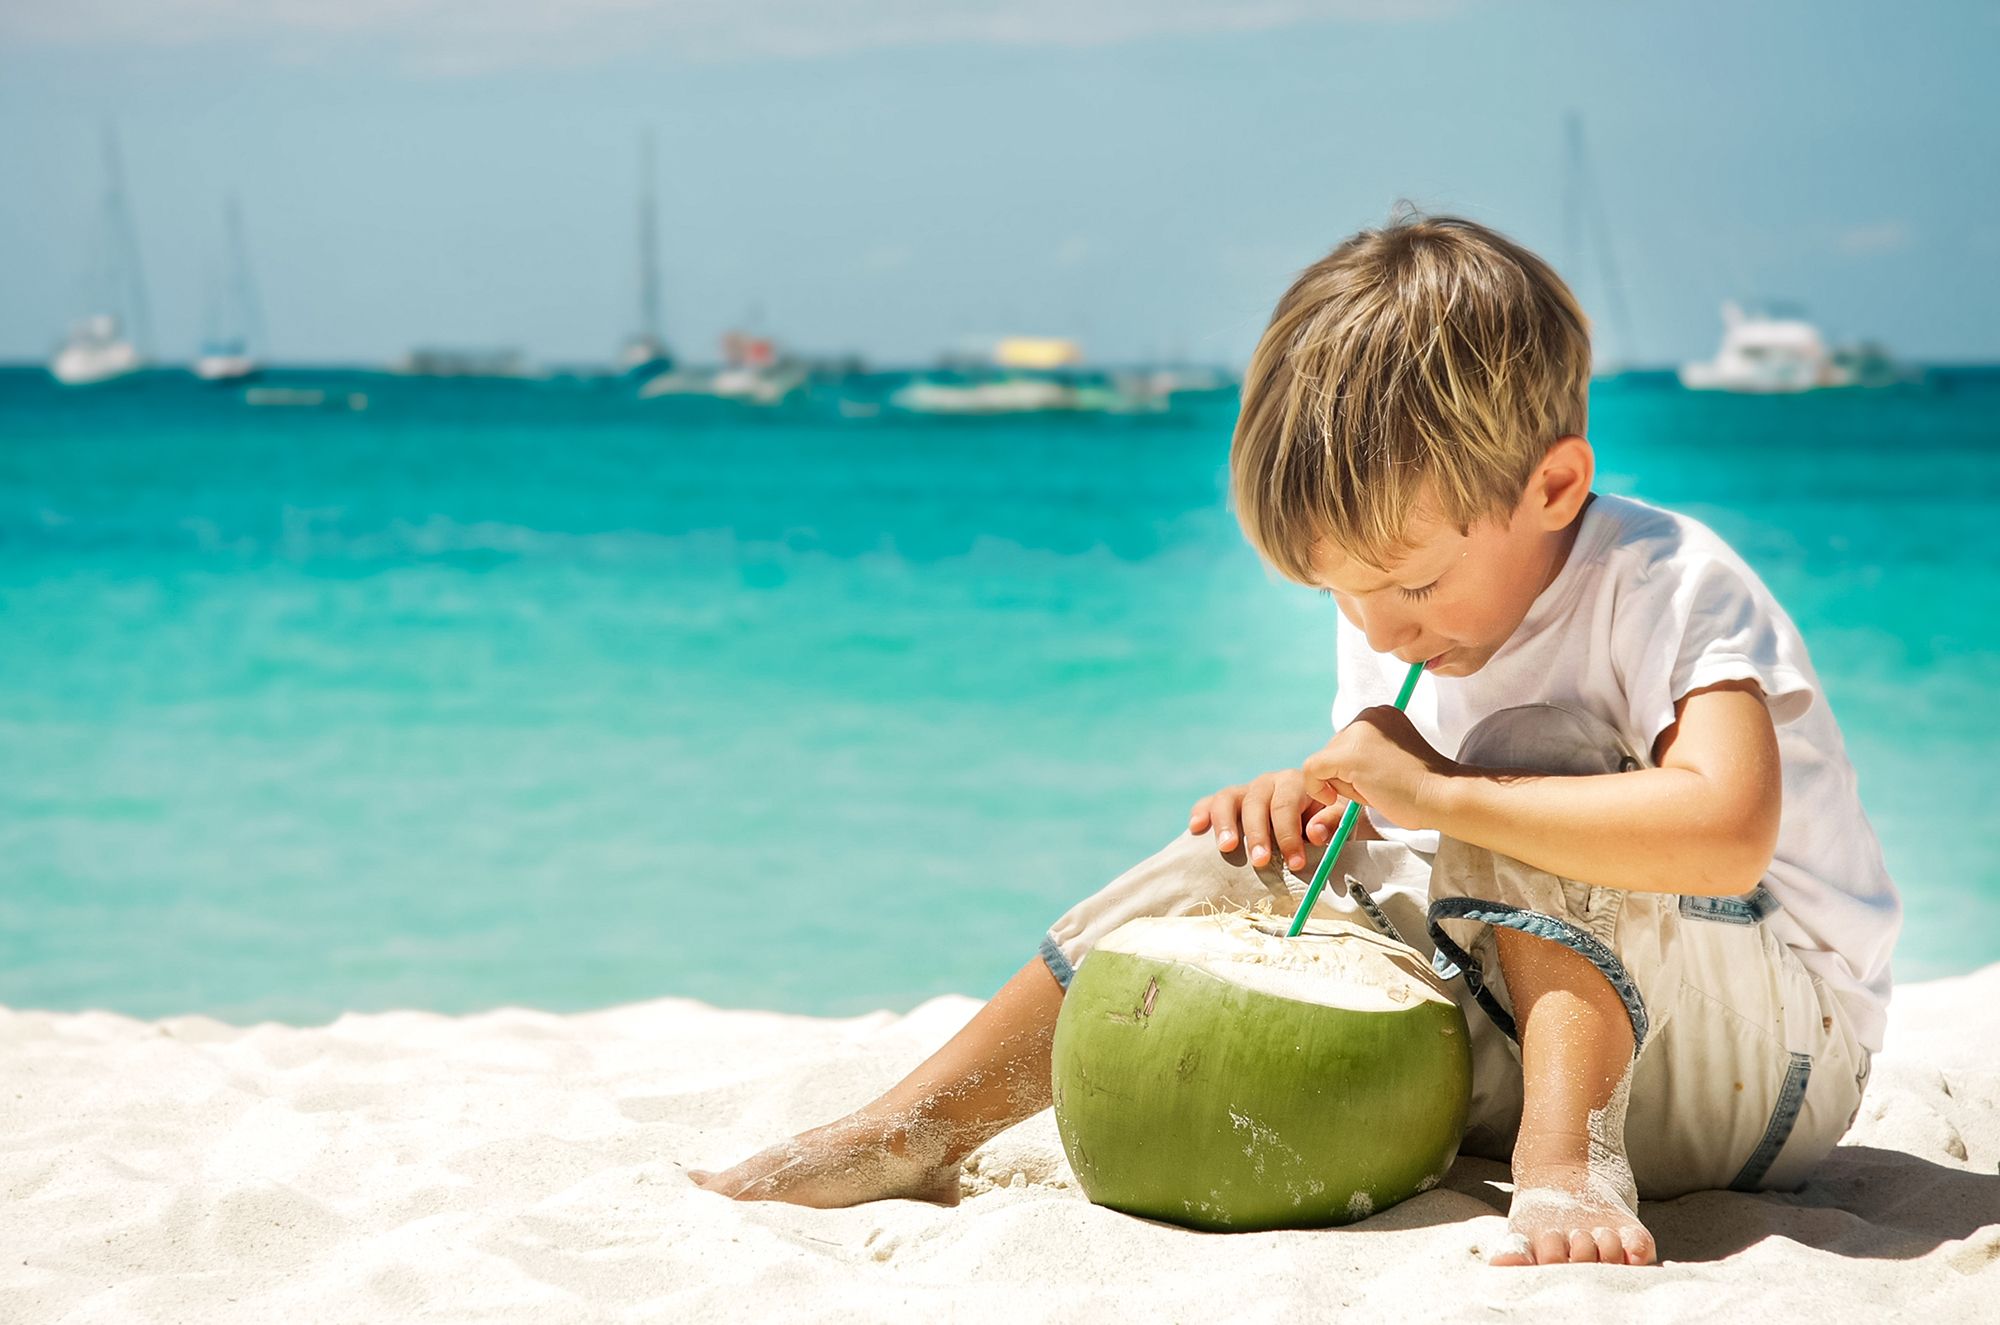 Turks Caicos Young Boy Coconut Beach